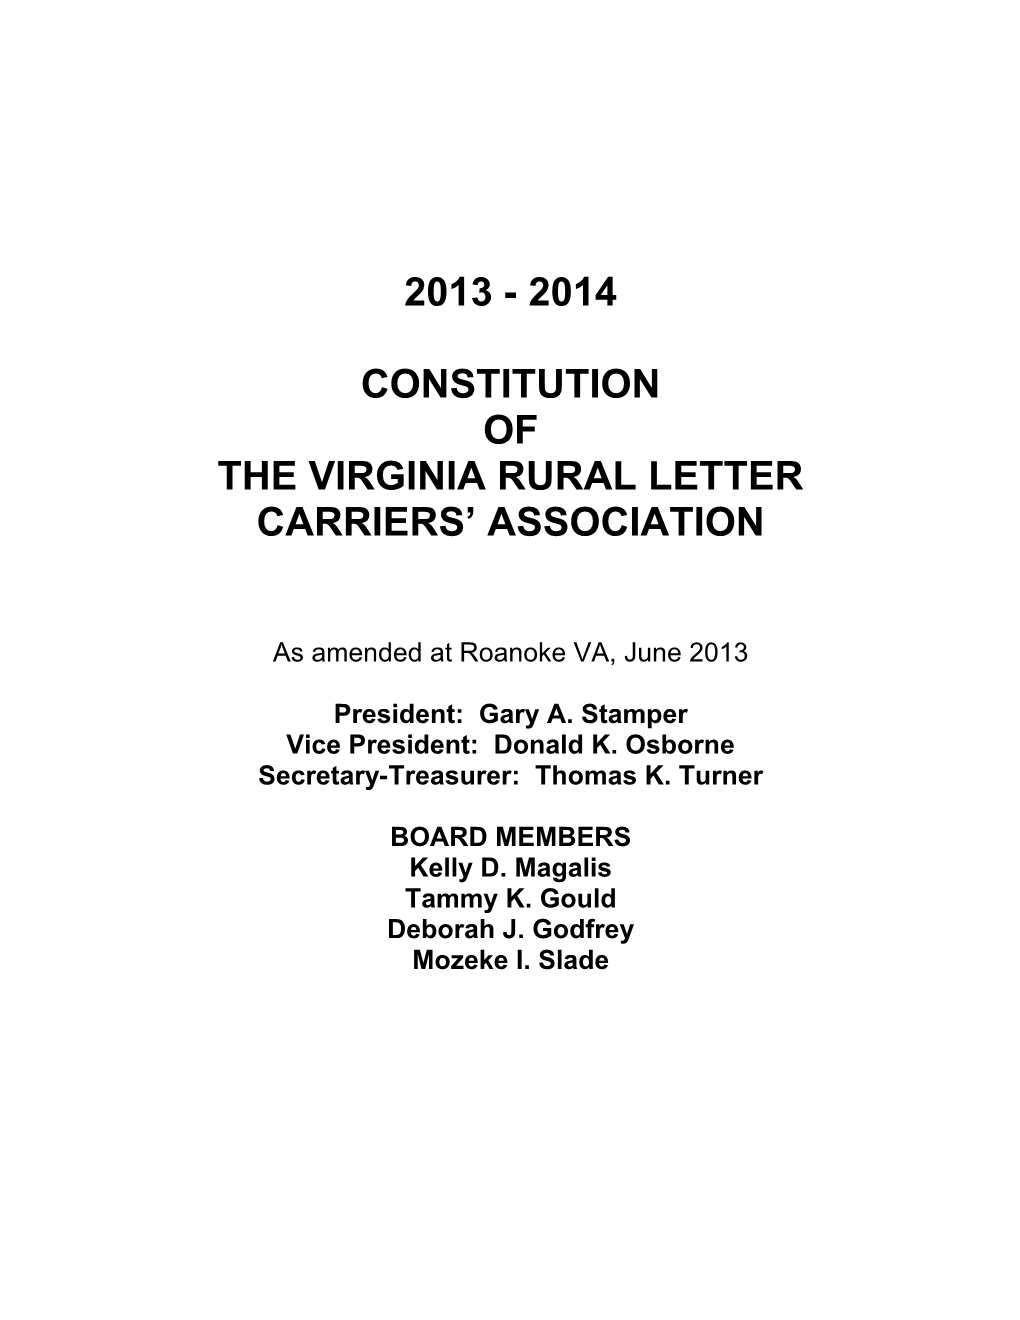 The Virginia Rural Letter